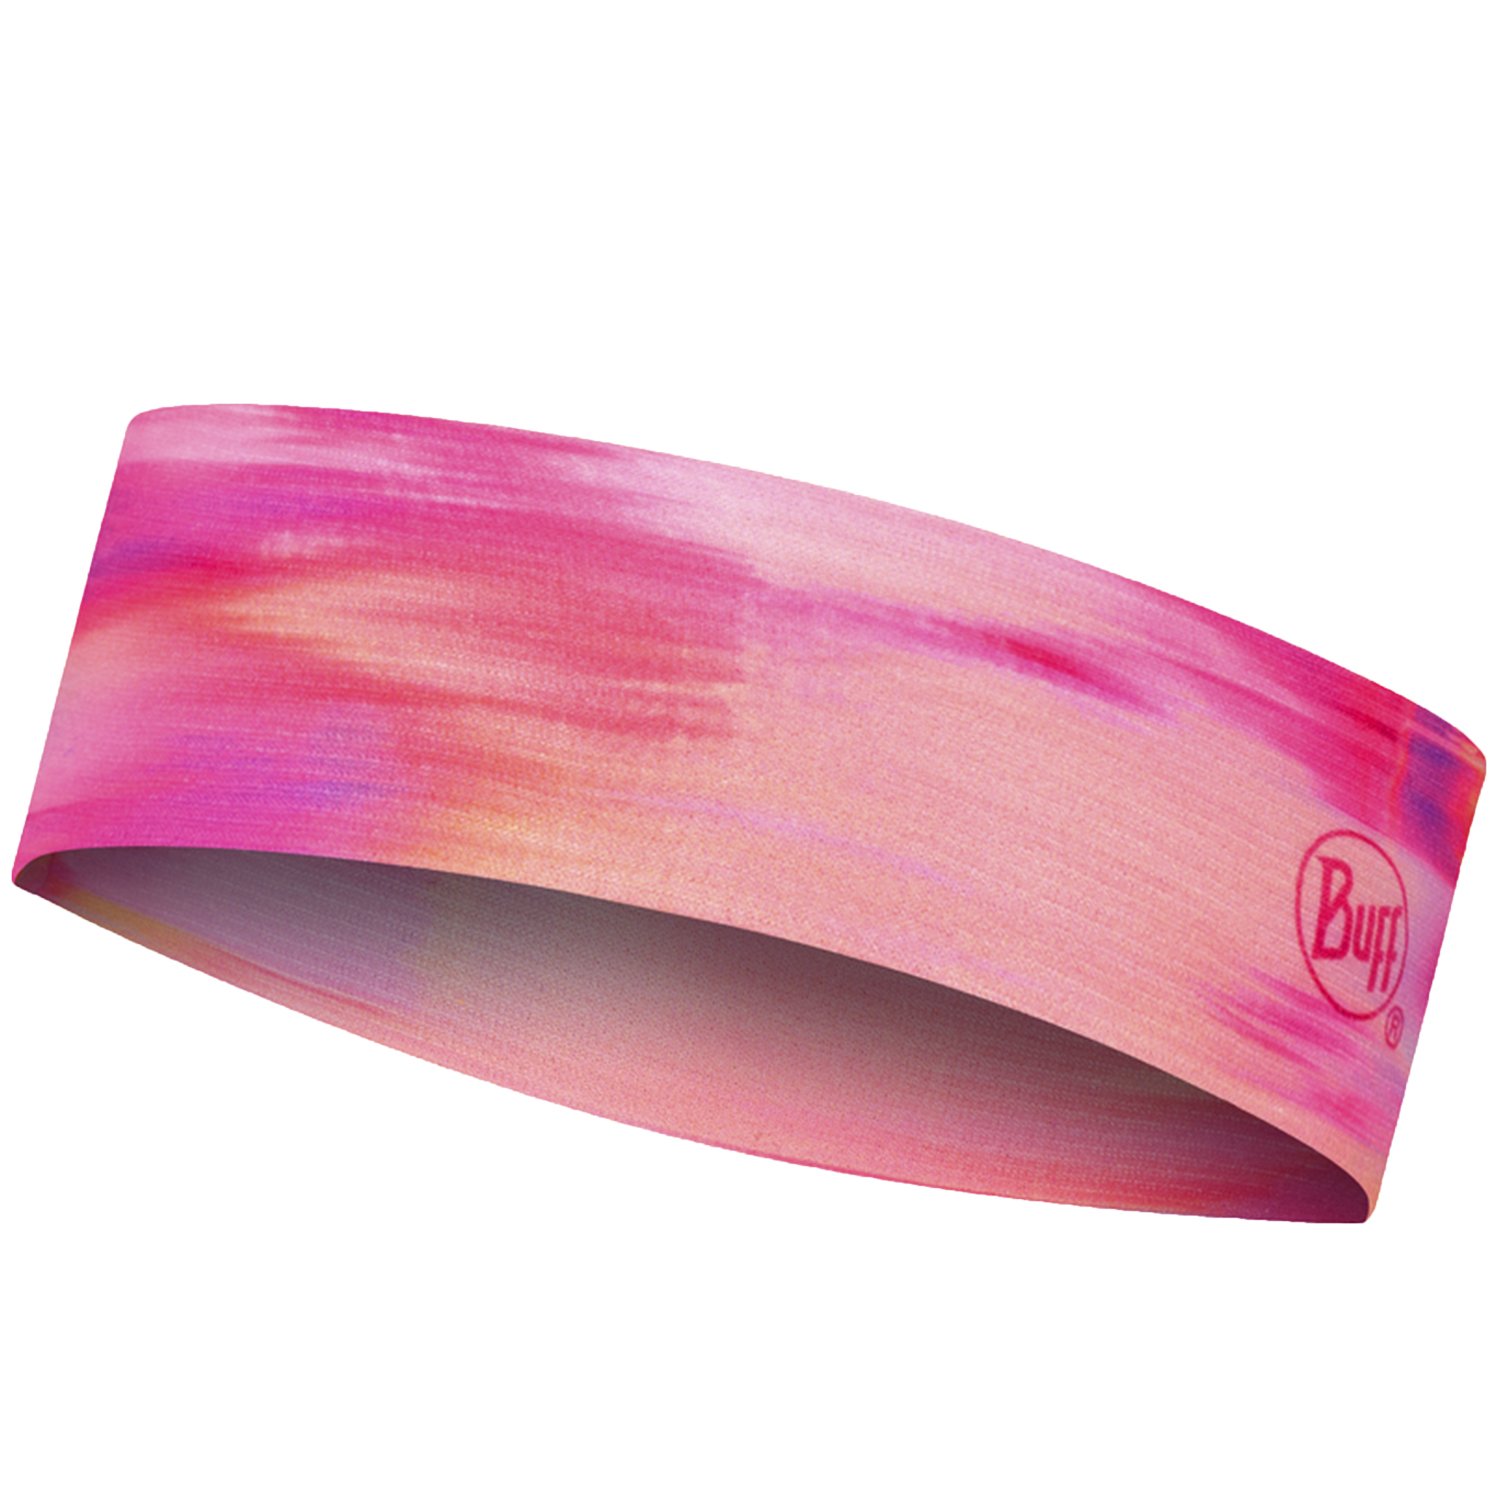 Повязка Buff CoolNet UV+ Slim Headband Sish Pink Fluor, 128749.522.10.00 повязка buff coolnet uv headband crystal multi 120876 555 10 00